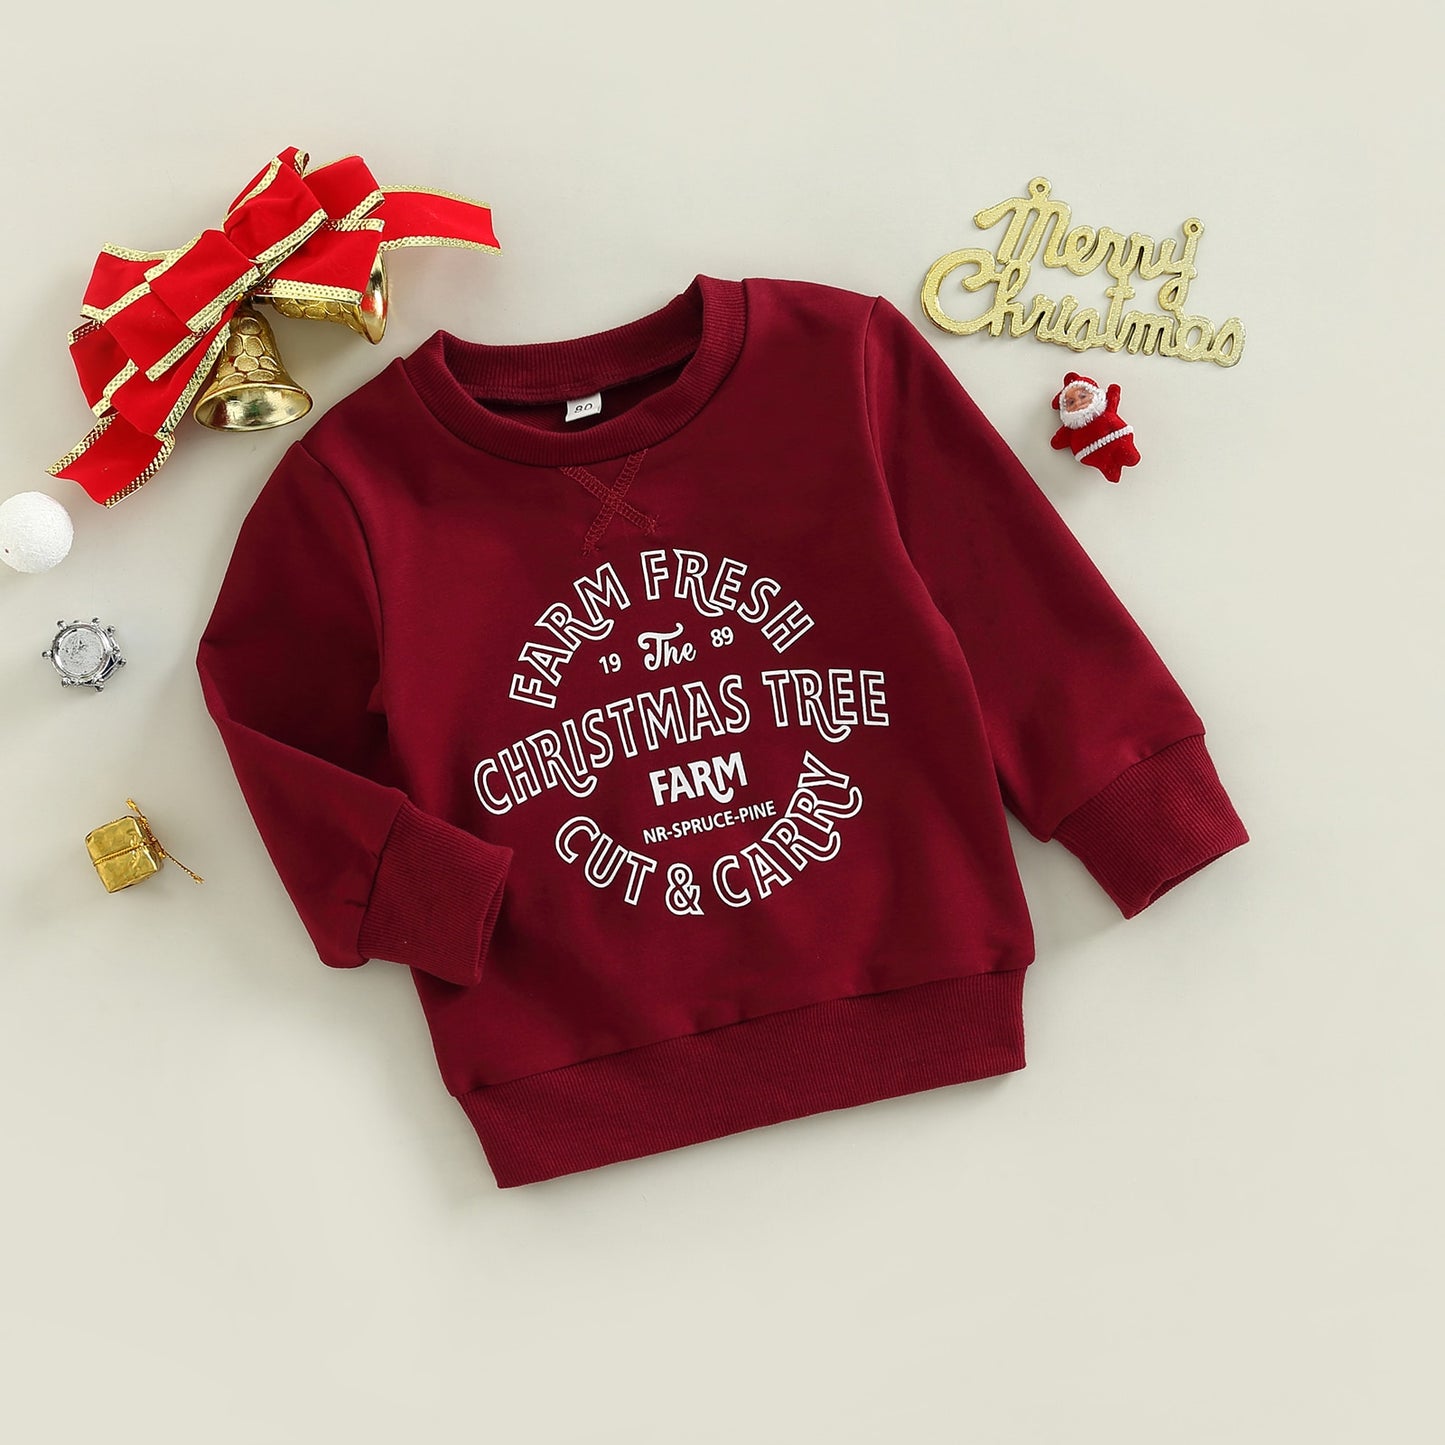 Unisex Infant Toddler Kids Red Christmas Tree Print Long Sleeve Pullover Sweatshirt